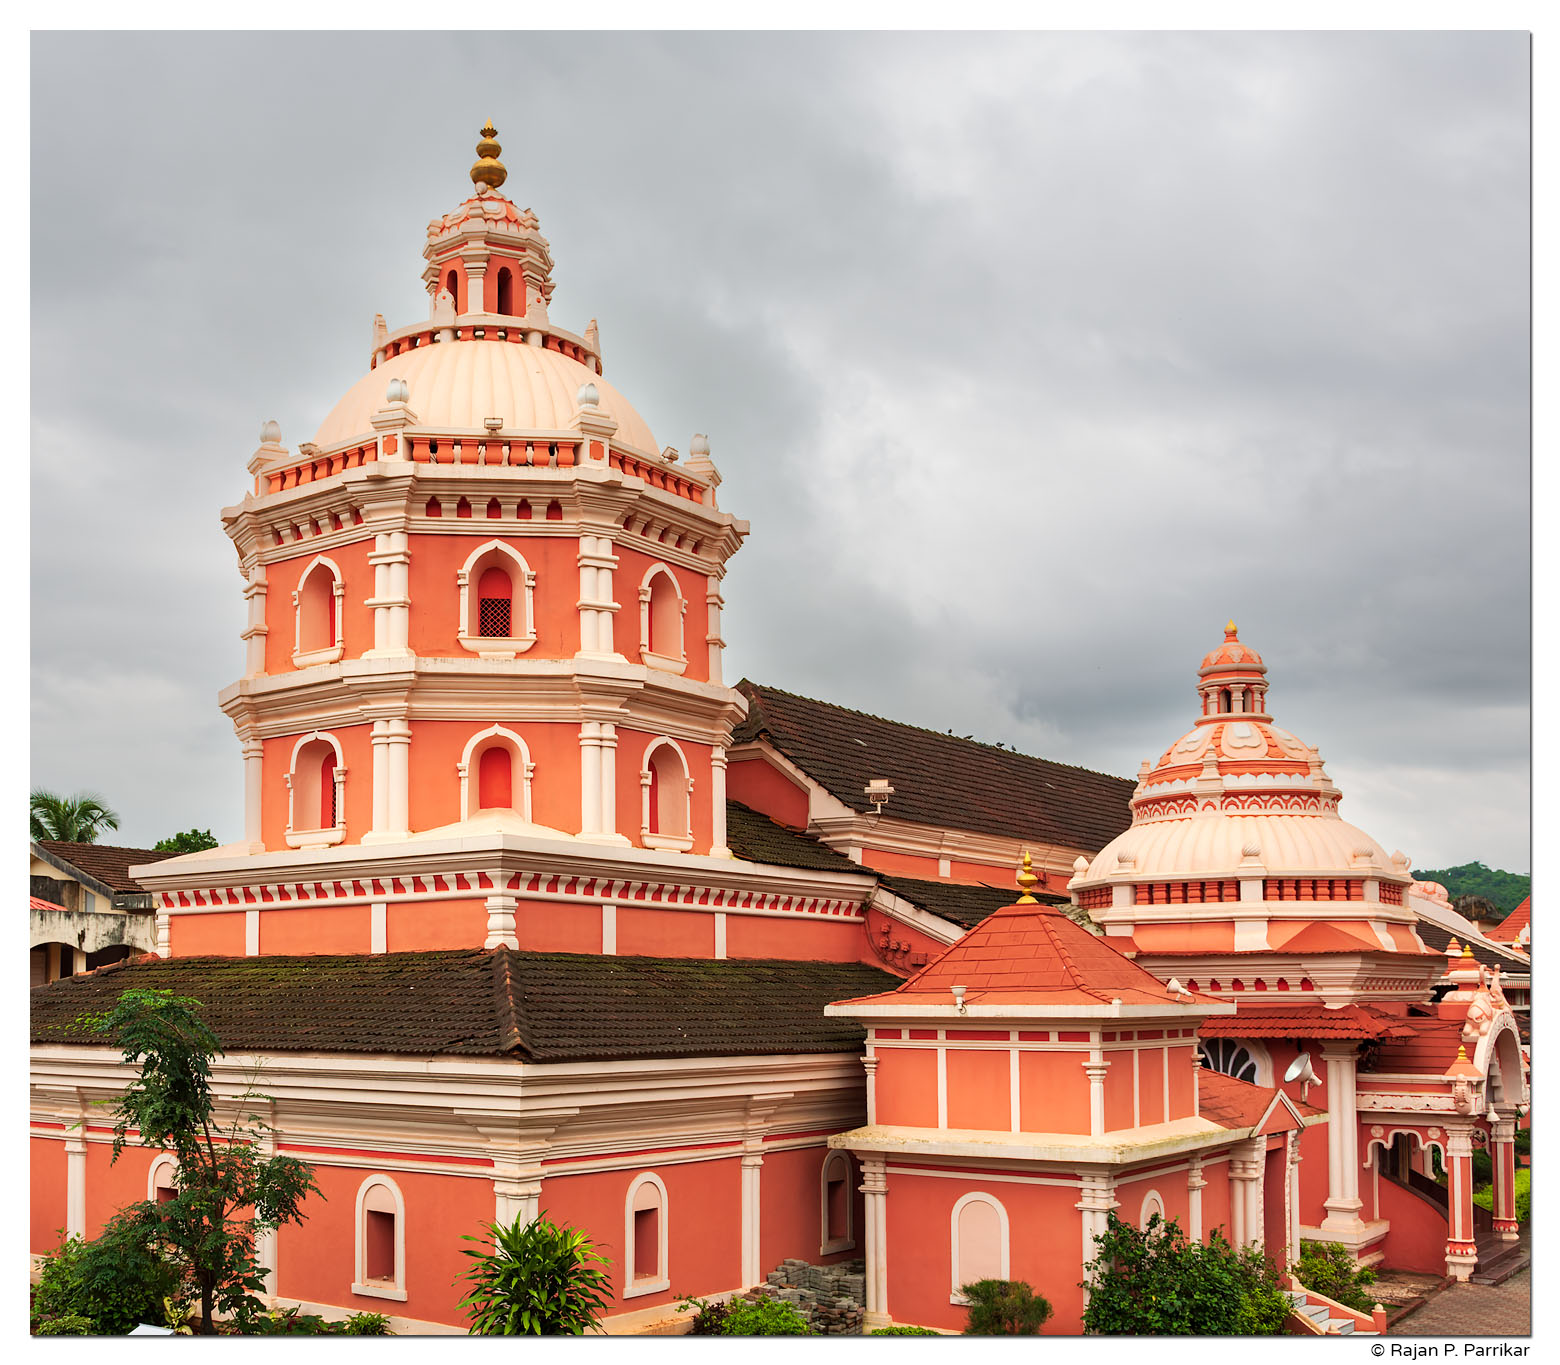 Mahalakshmi temple, Bandora, Goa